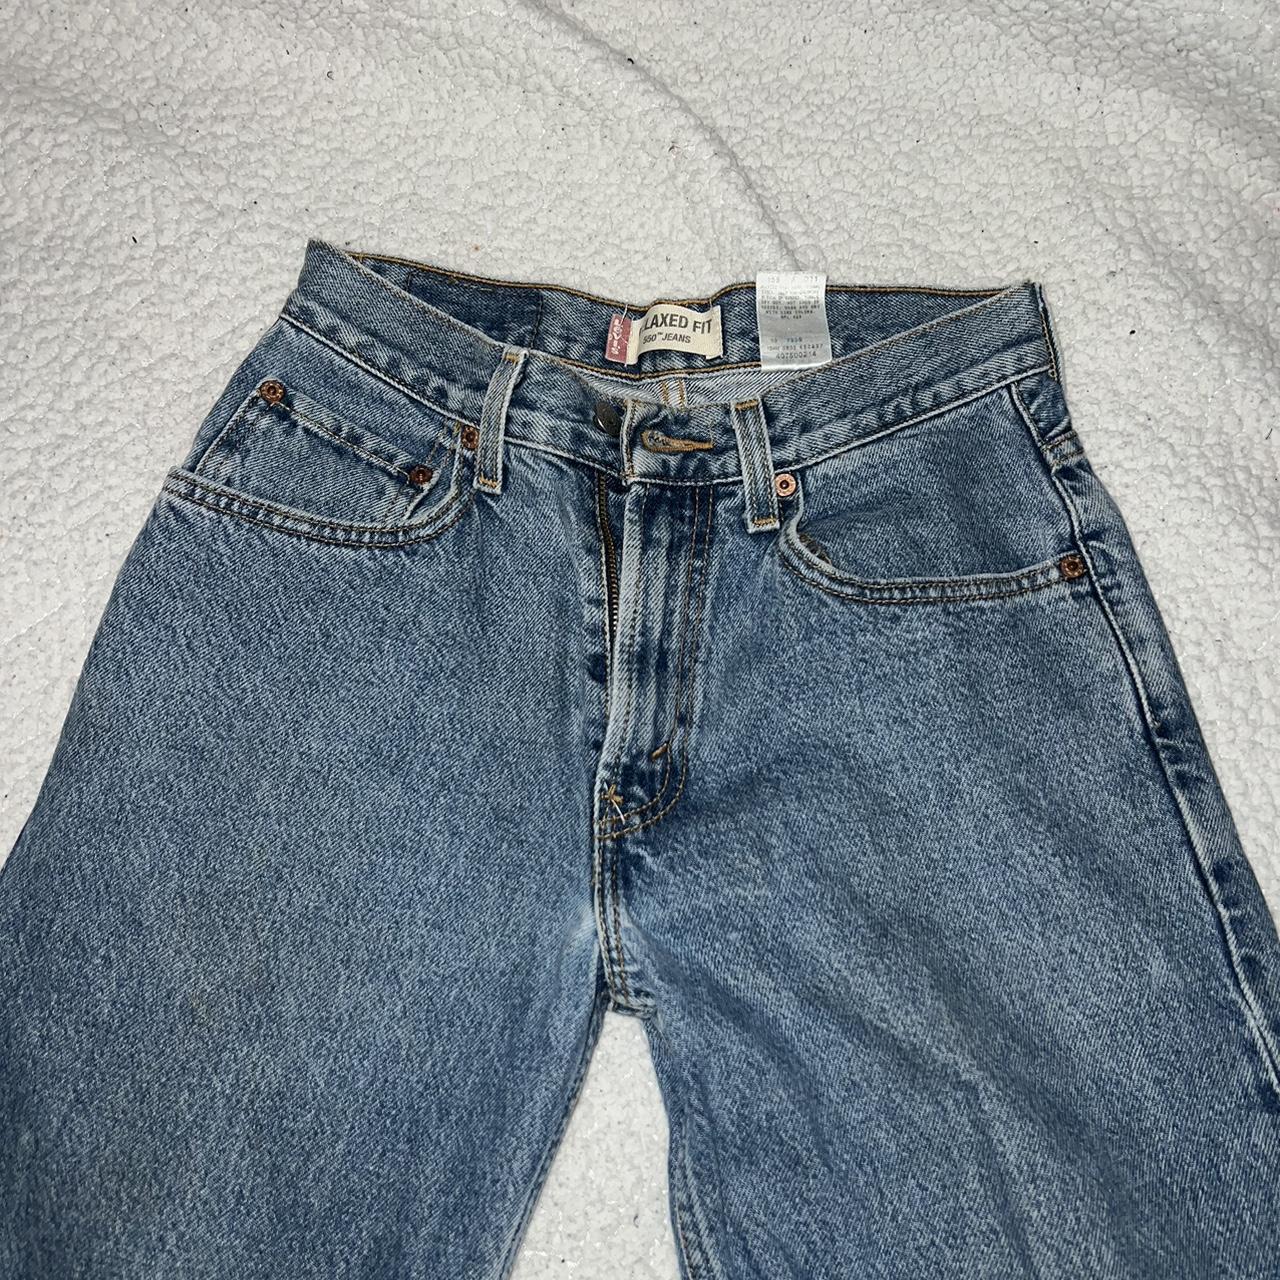 Levi’s vintage jeans - Depop